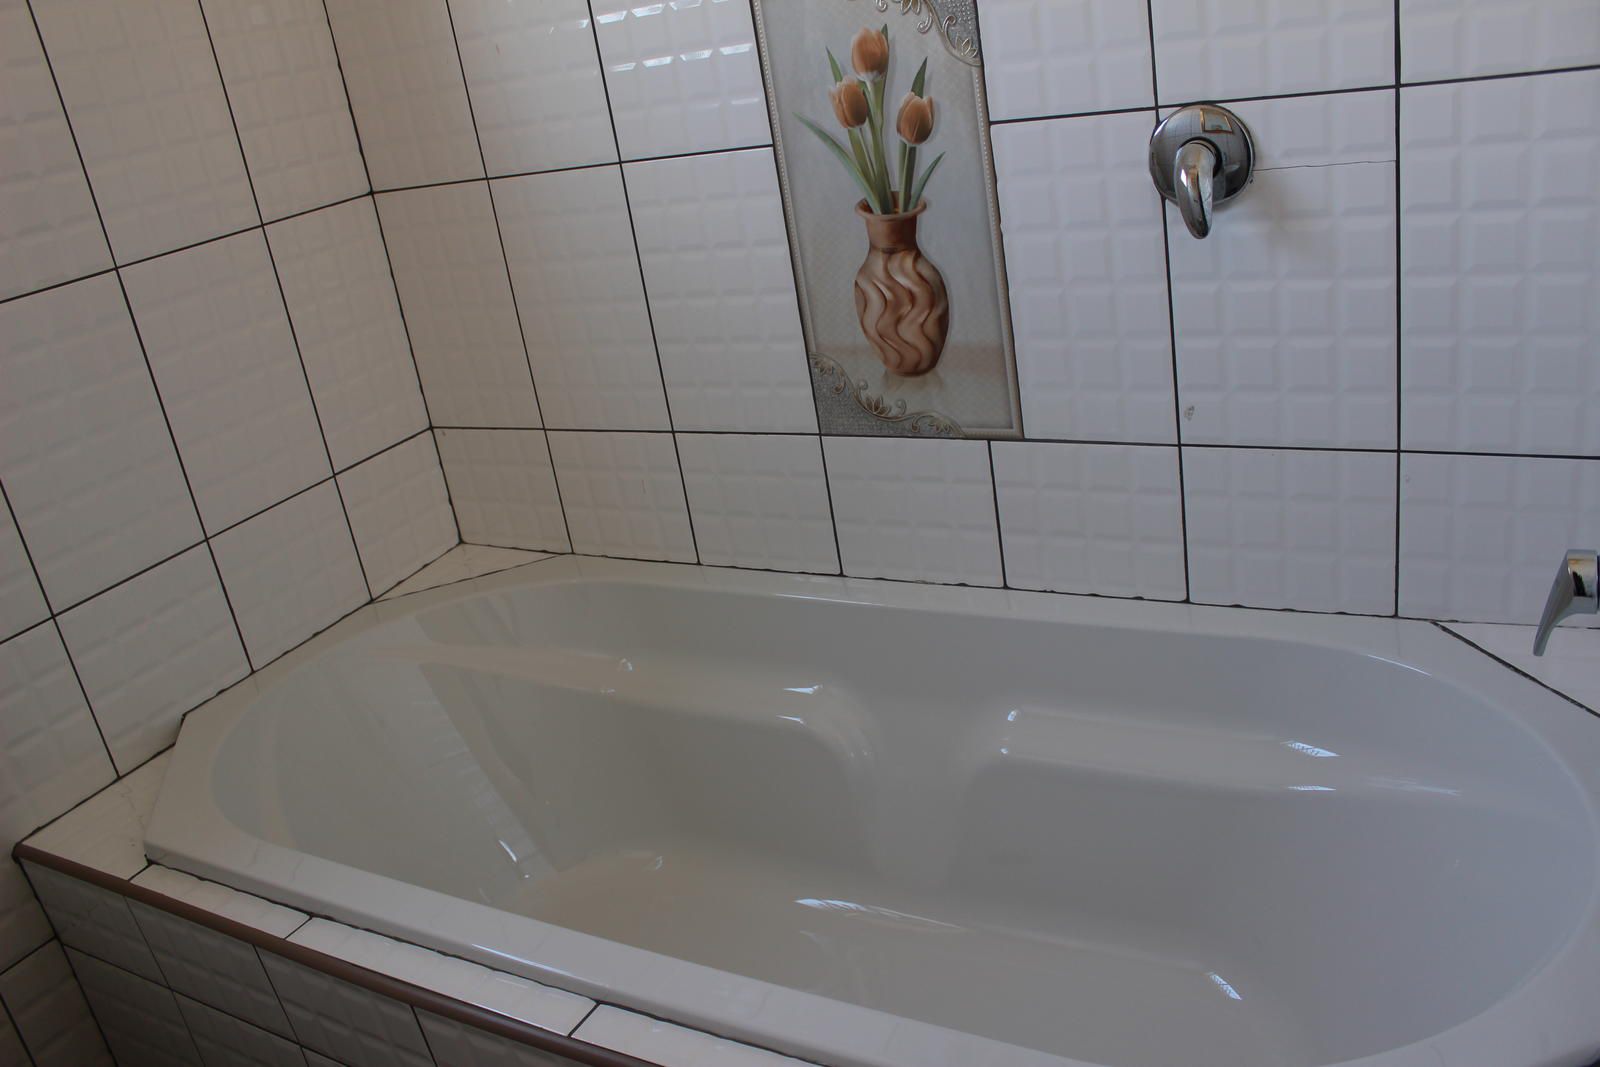 Kulani Country Lodge Giyani Limpopo Province South Africa Unsaturated, Bathroom